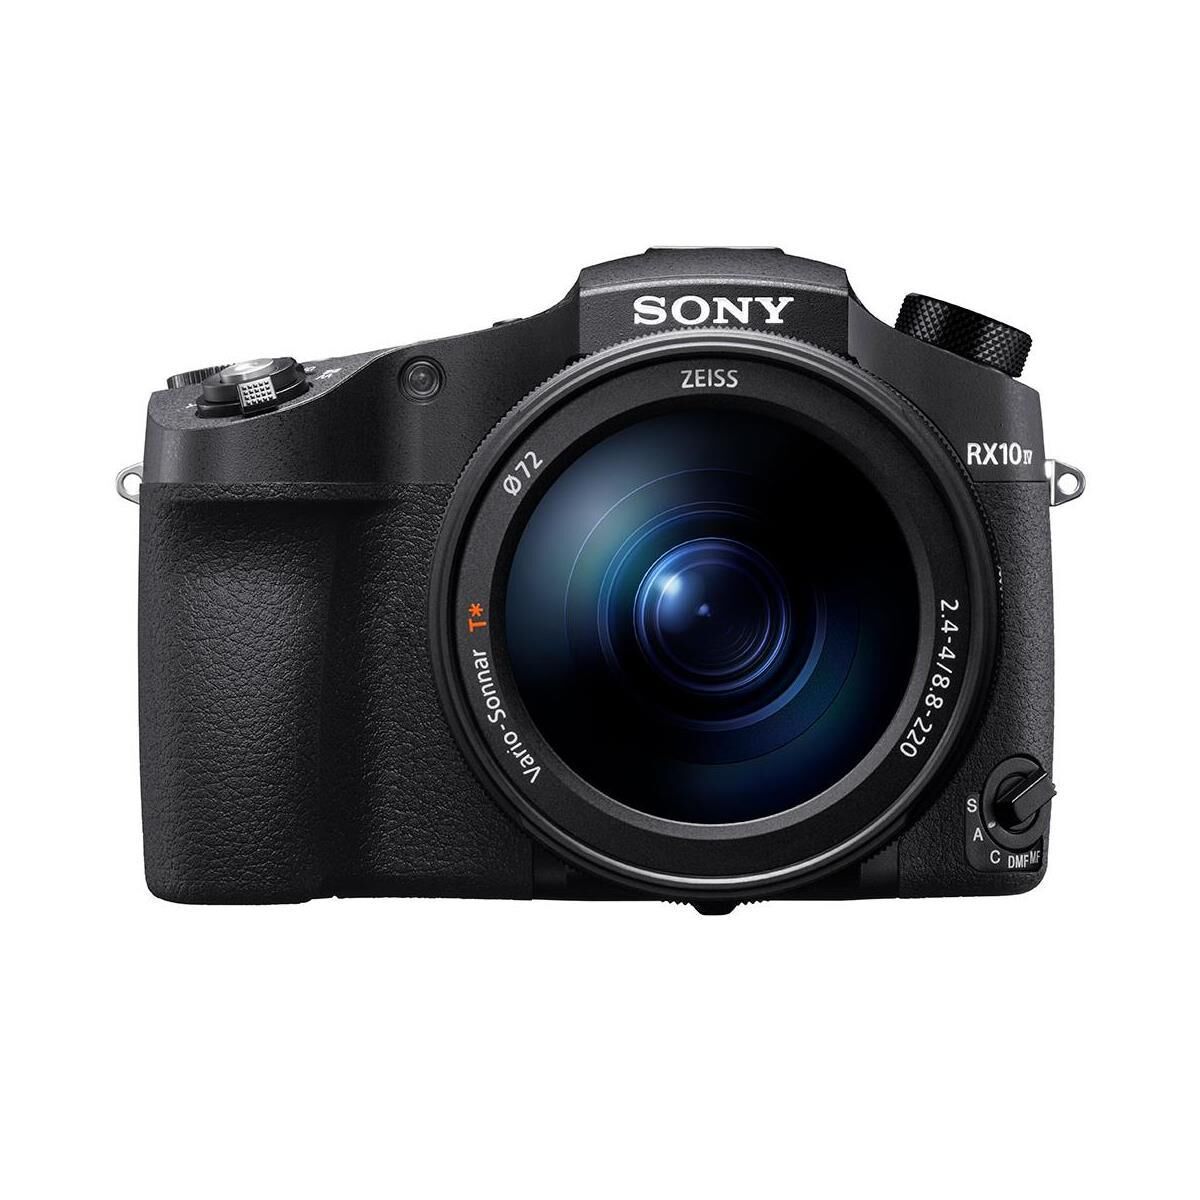 Sony Cyber-shot DSC-RX10 IV 20.1MP Digital Camera, Black